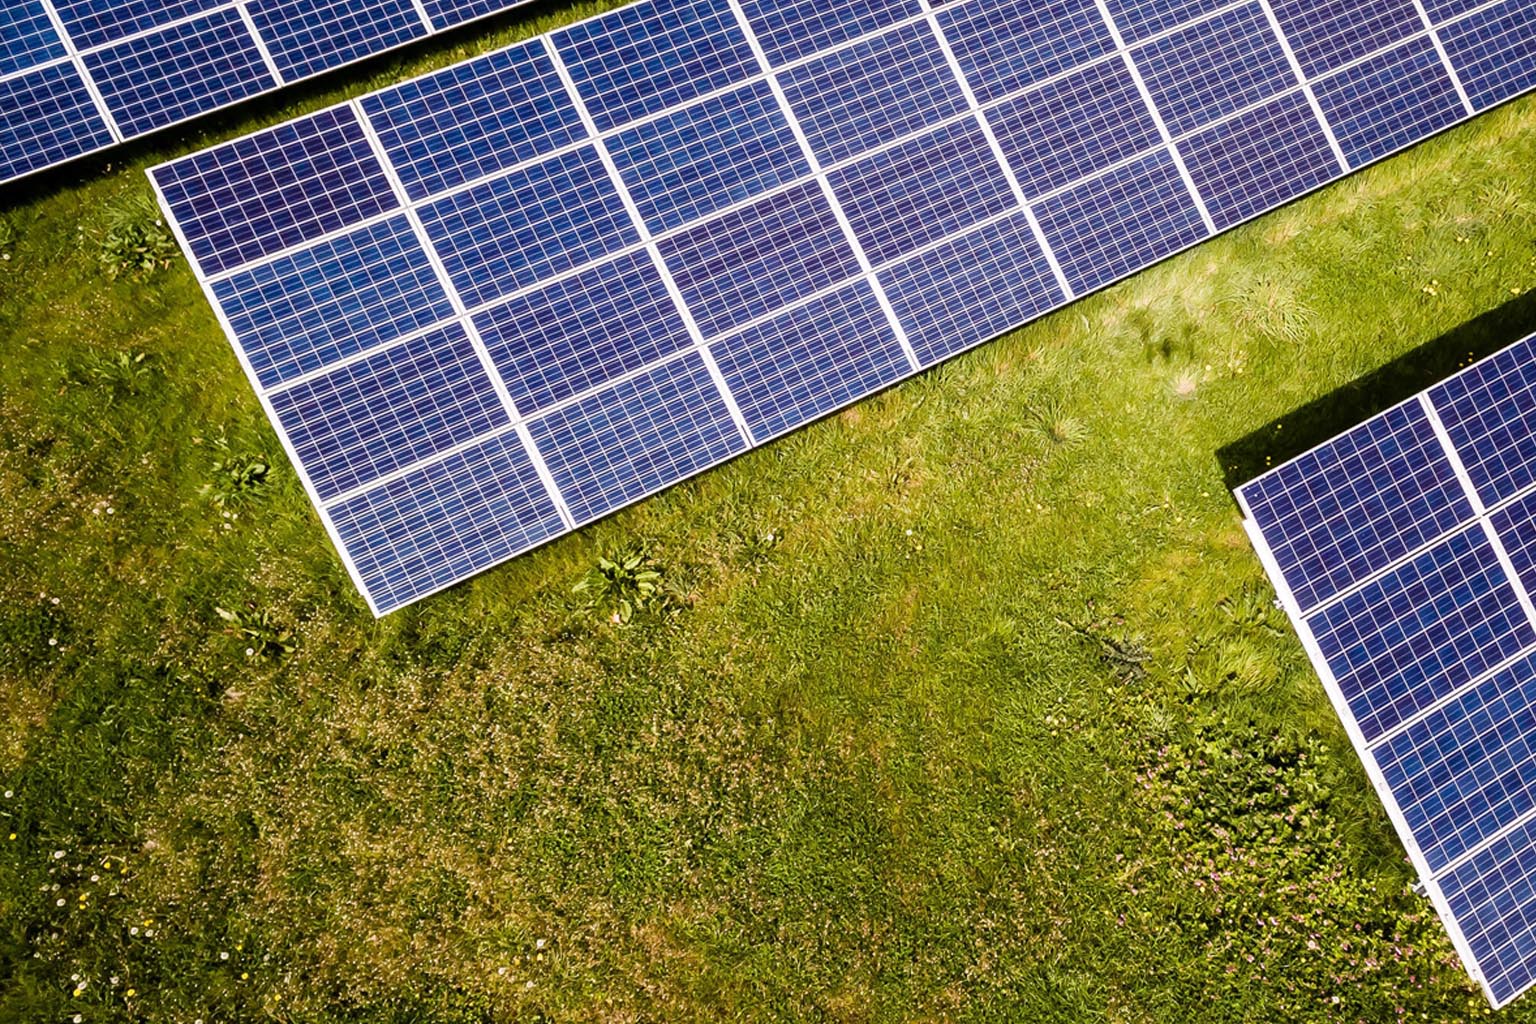 solar panels on grass